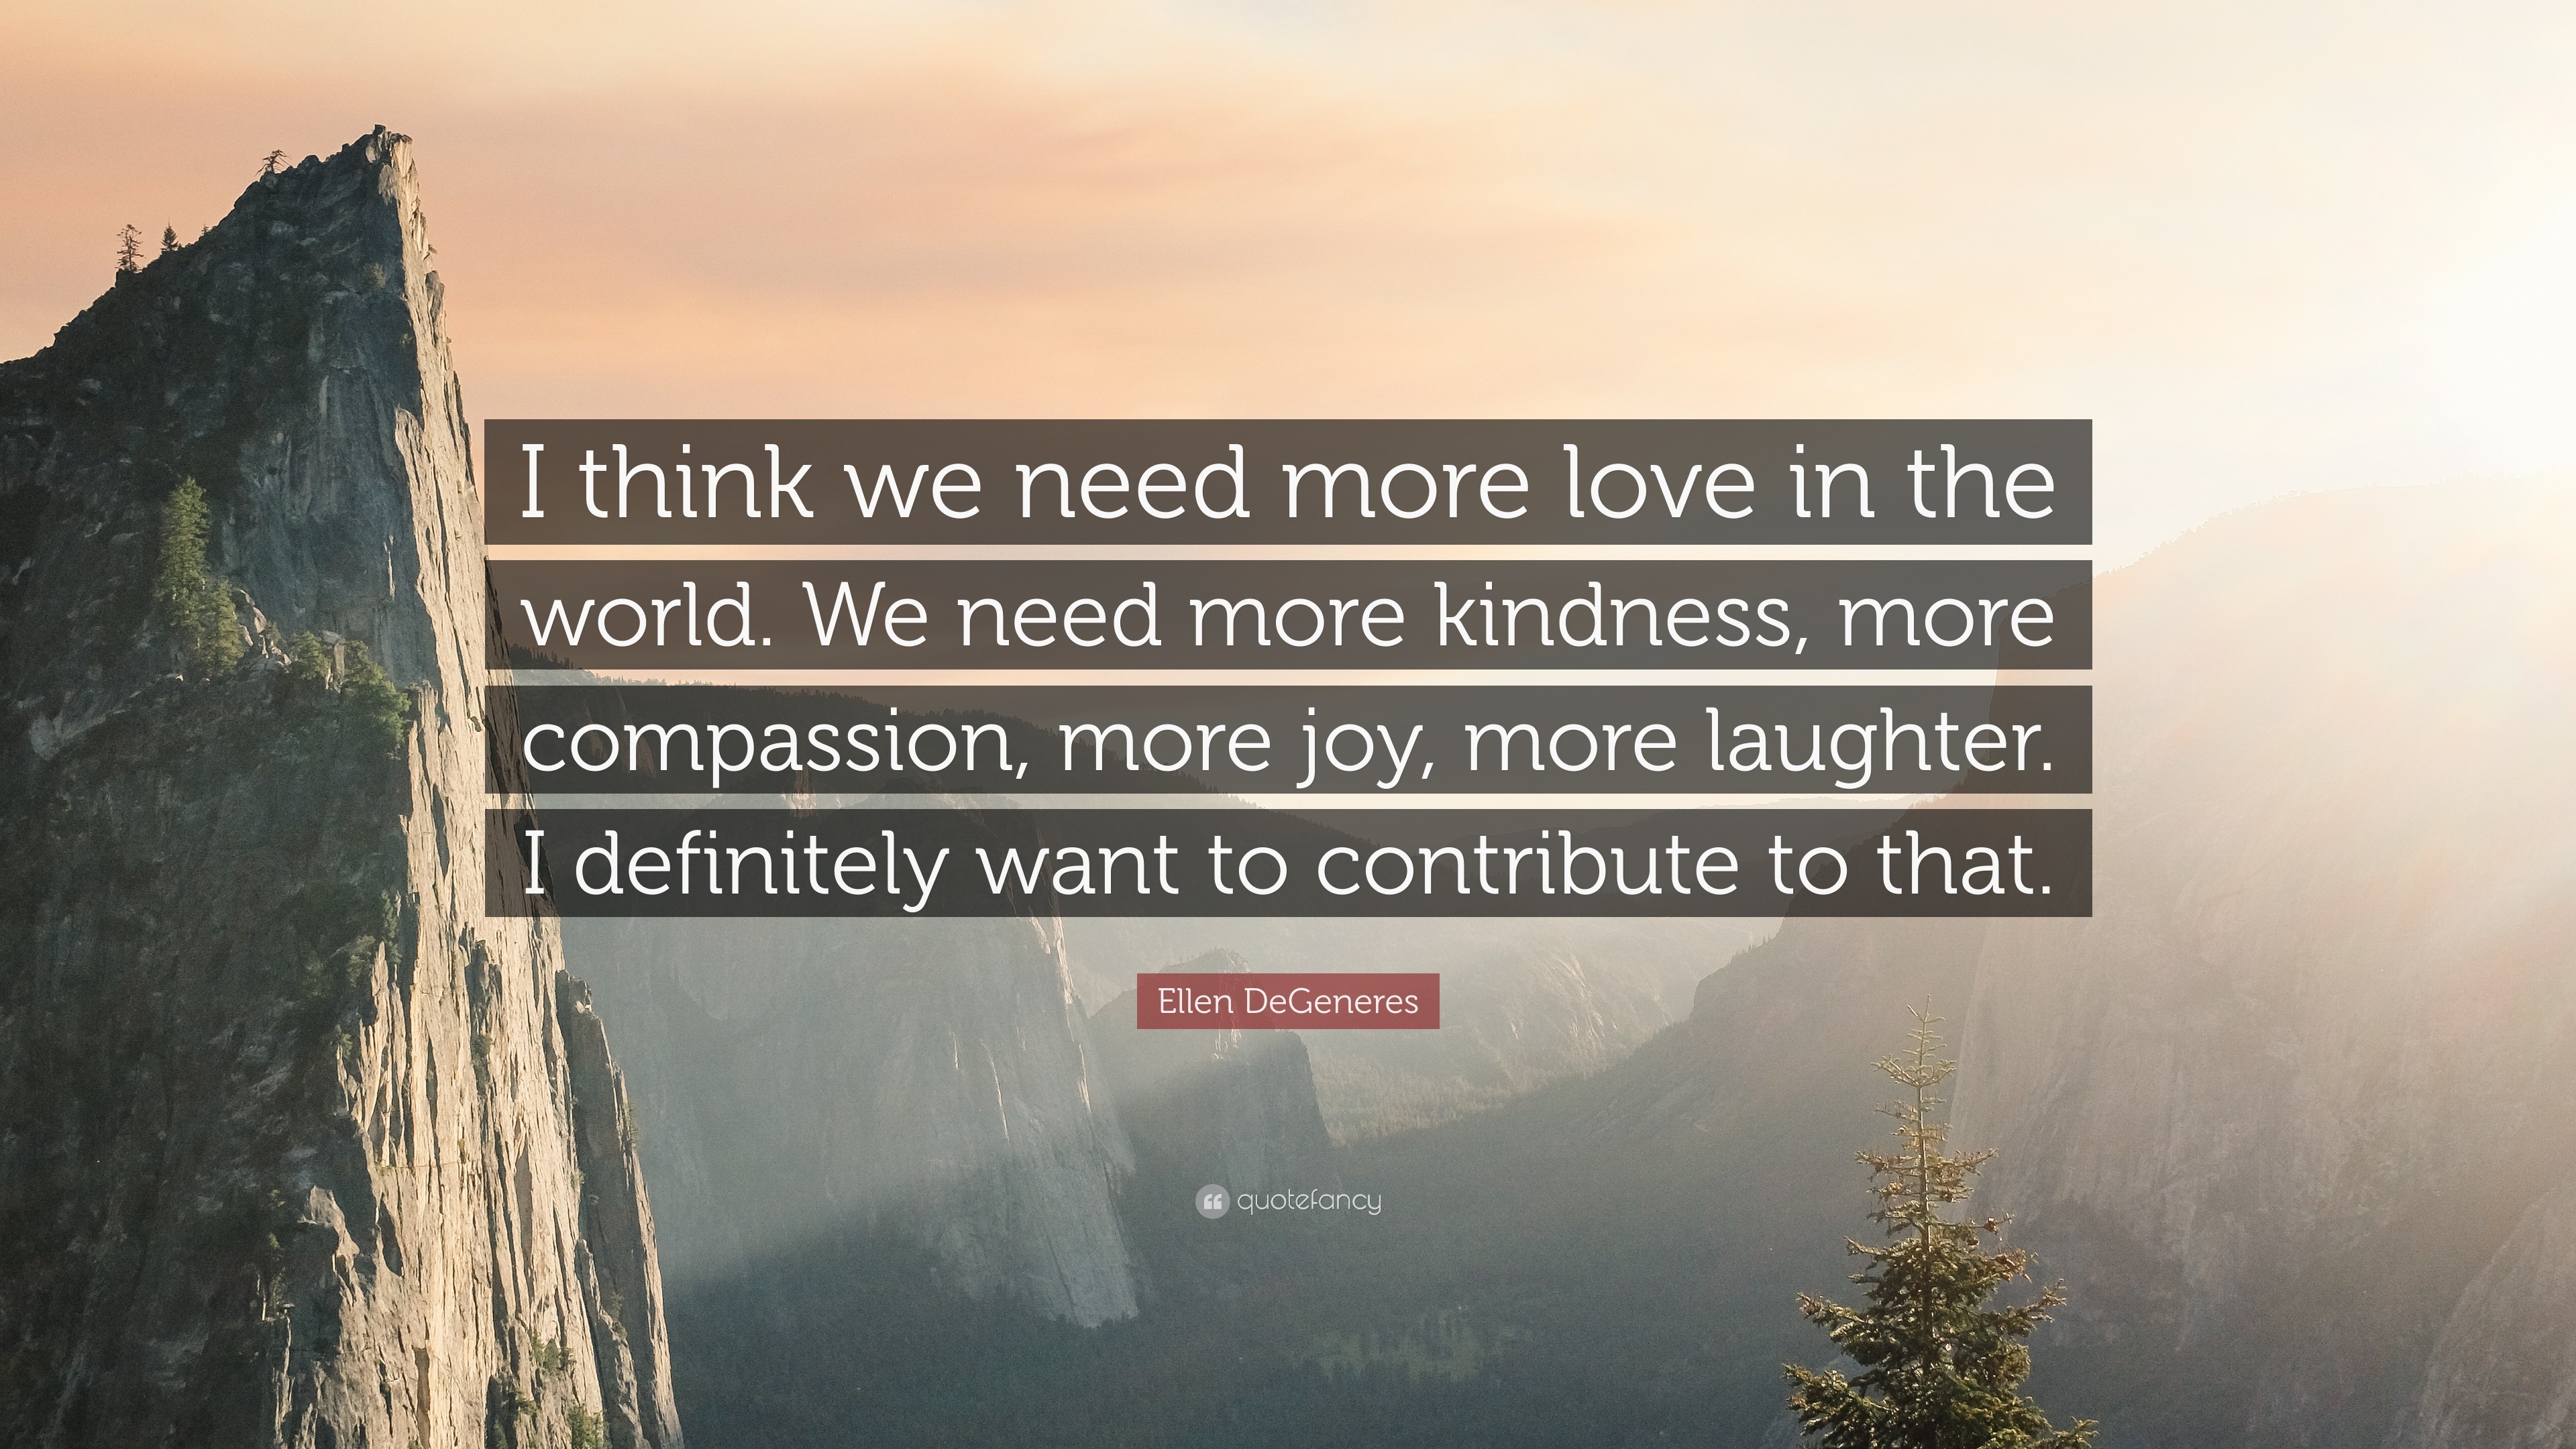 Ellen DeGeneres Quote: “We need more kindness, more compassion